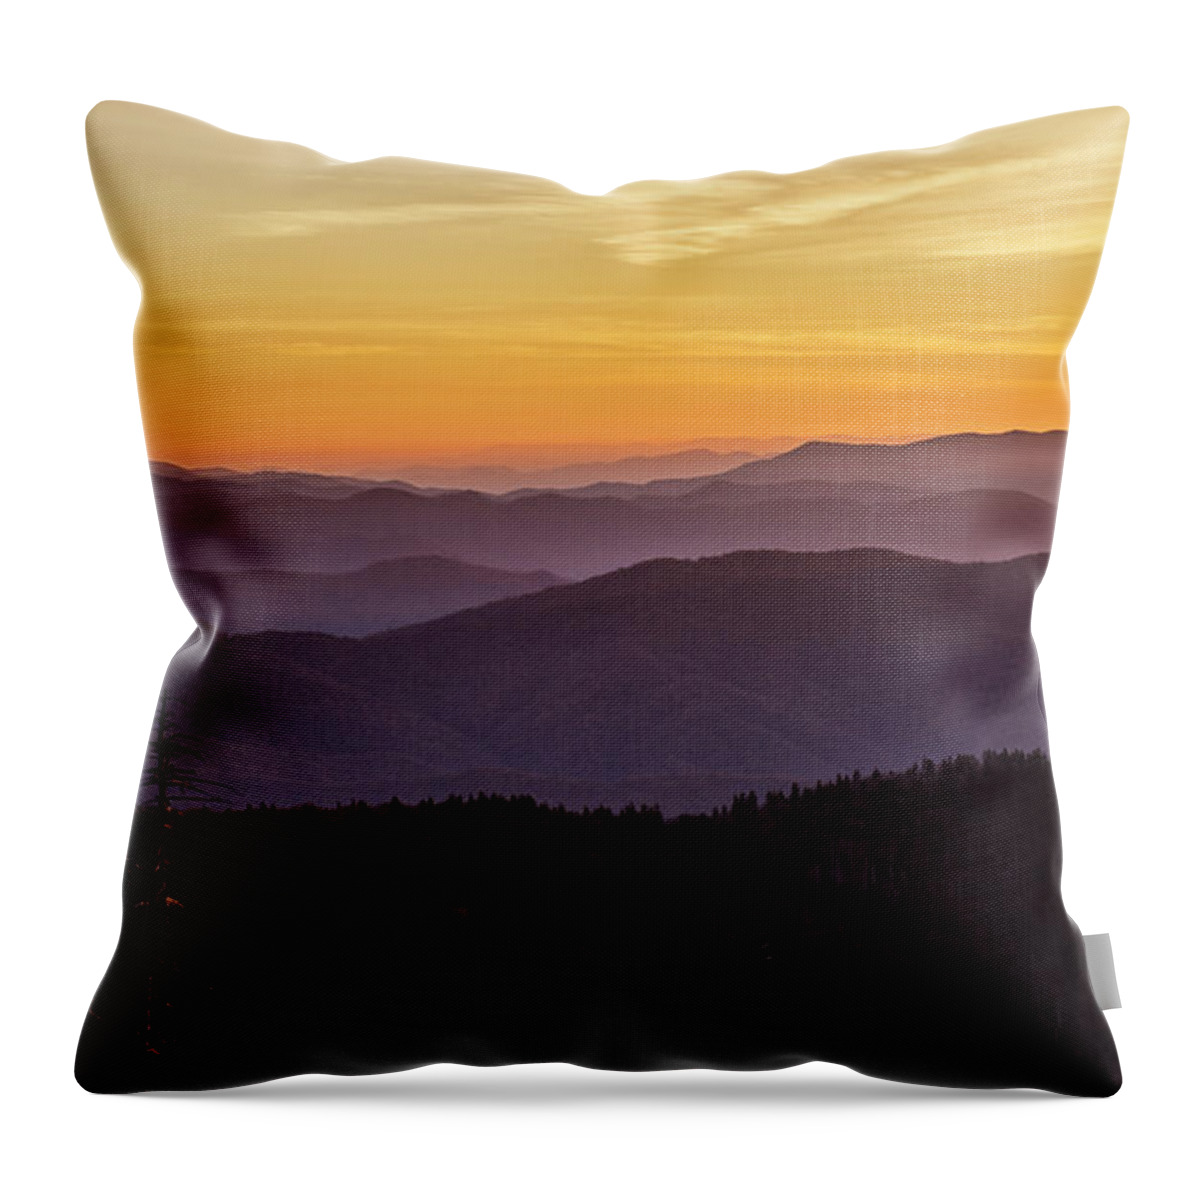 Smoky Mountains Throw Pillow featuring the photograph Smoky Mountain Morning by Peg Runyan